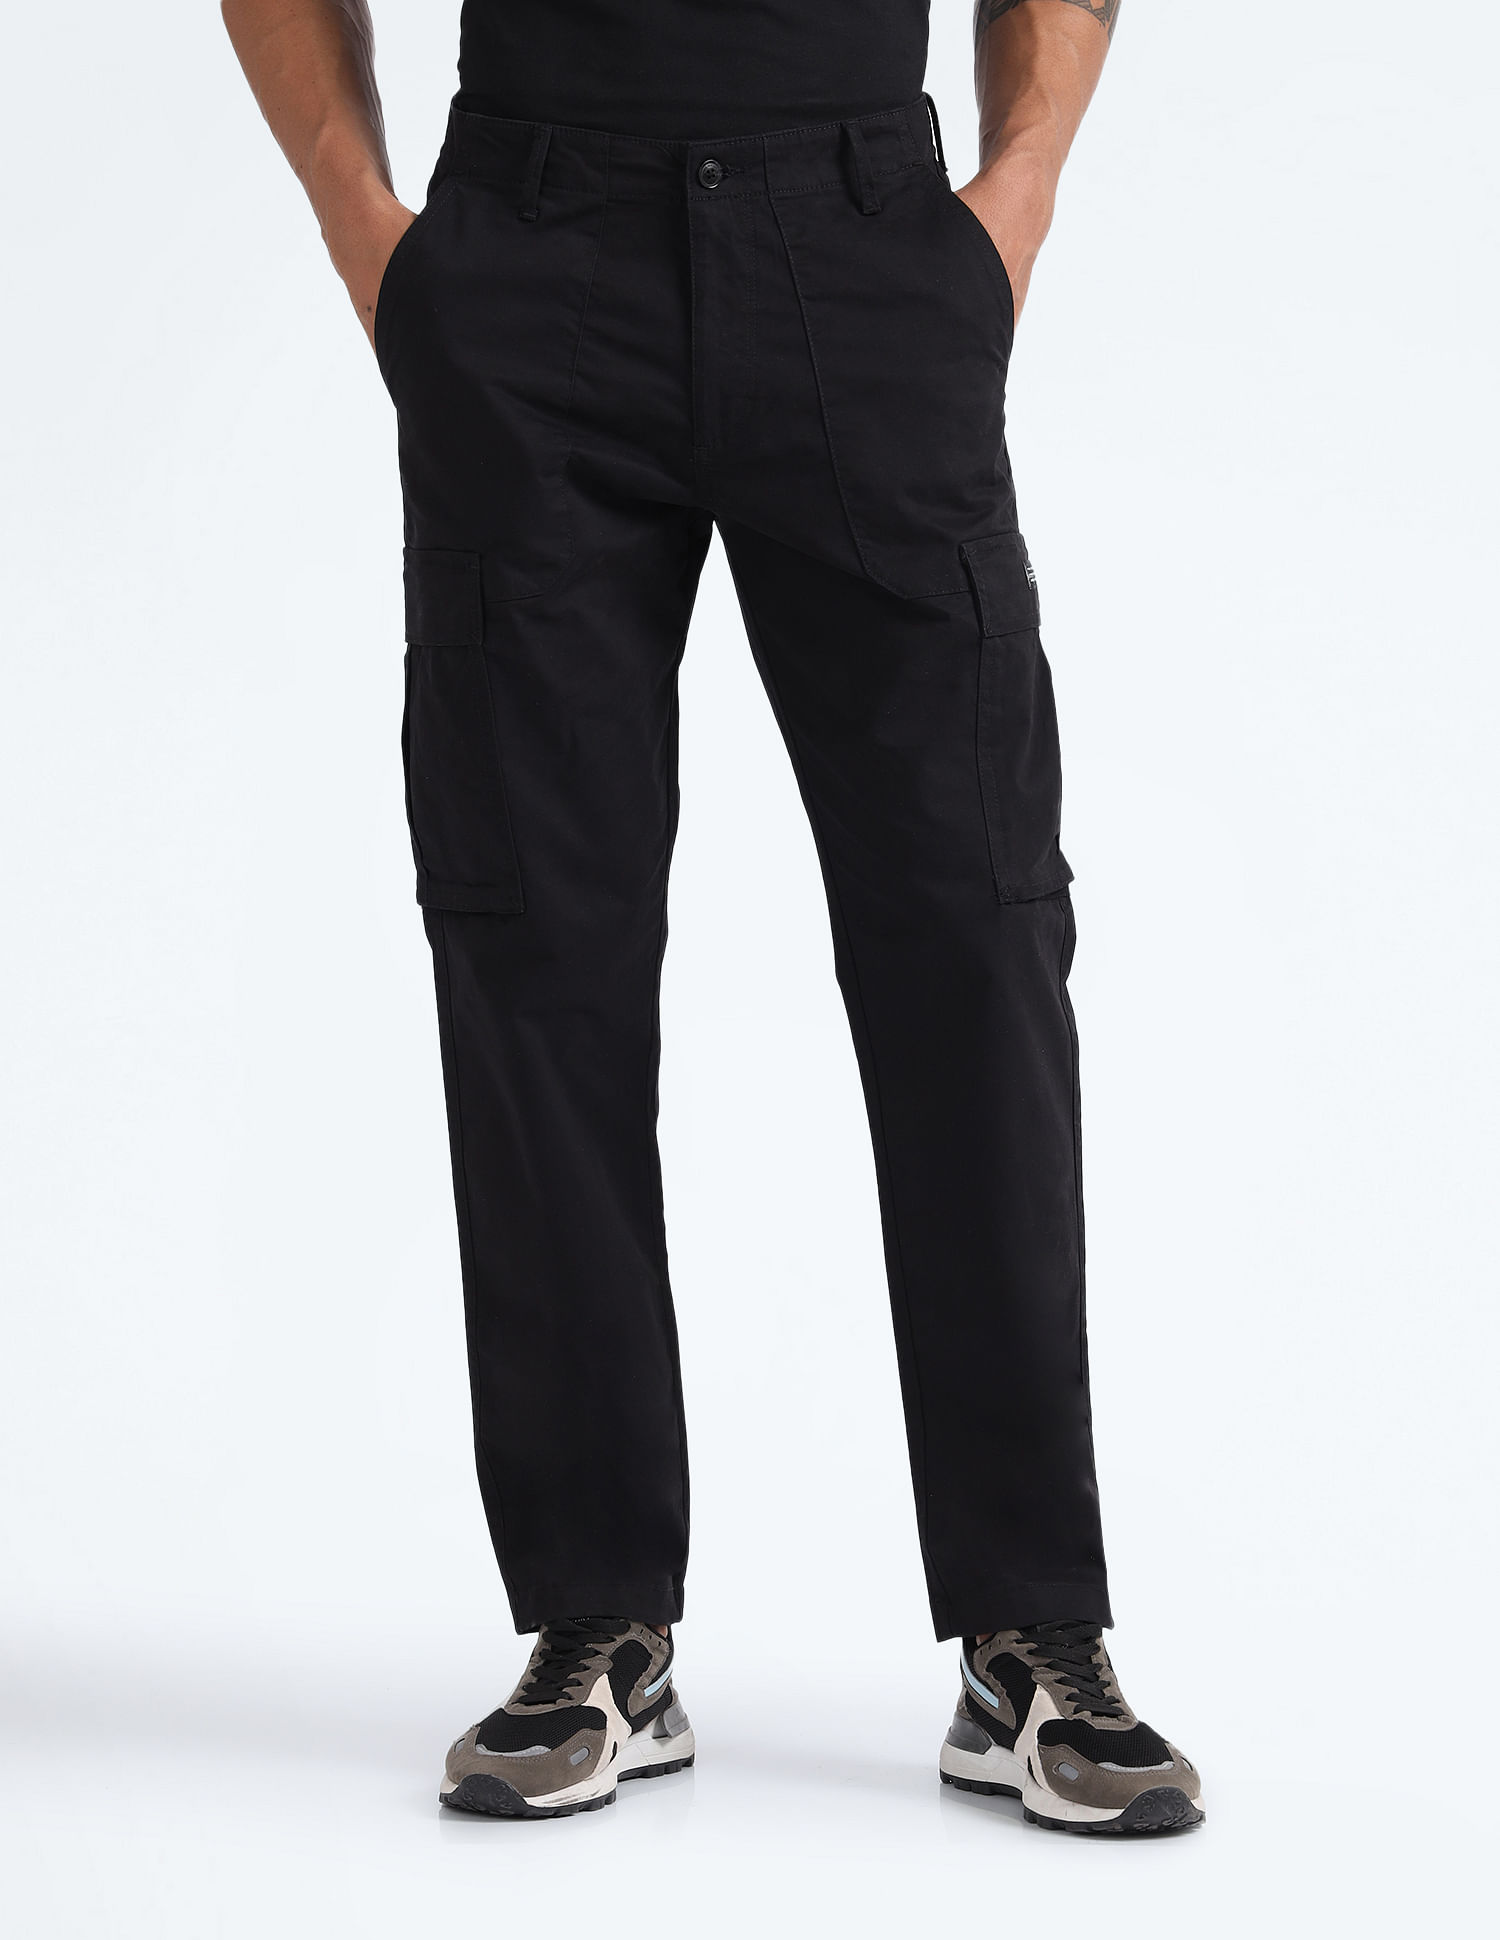 Buy ABCUSTOMS Stylish Men Flap Green Pocket Zip Detail Drawstring Waist  Cargo Pants at Amazon.in